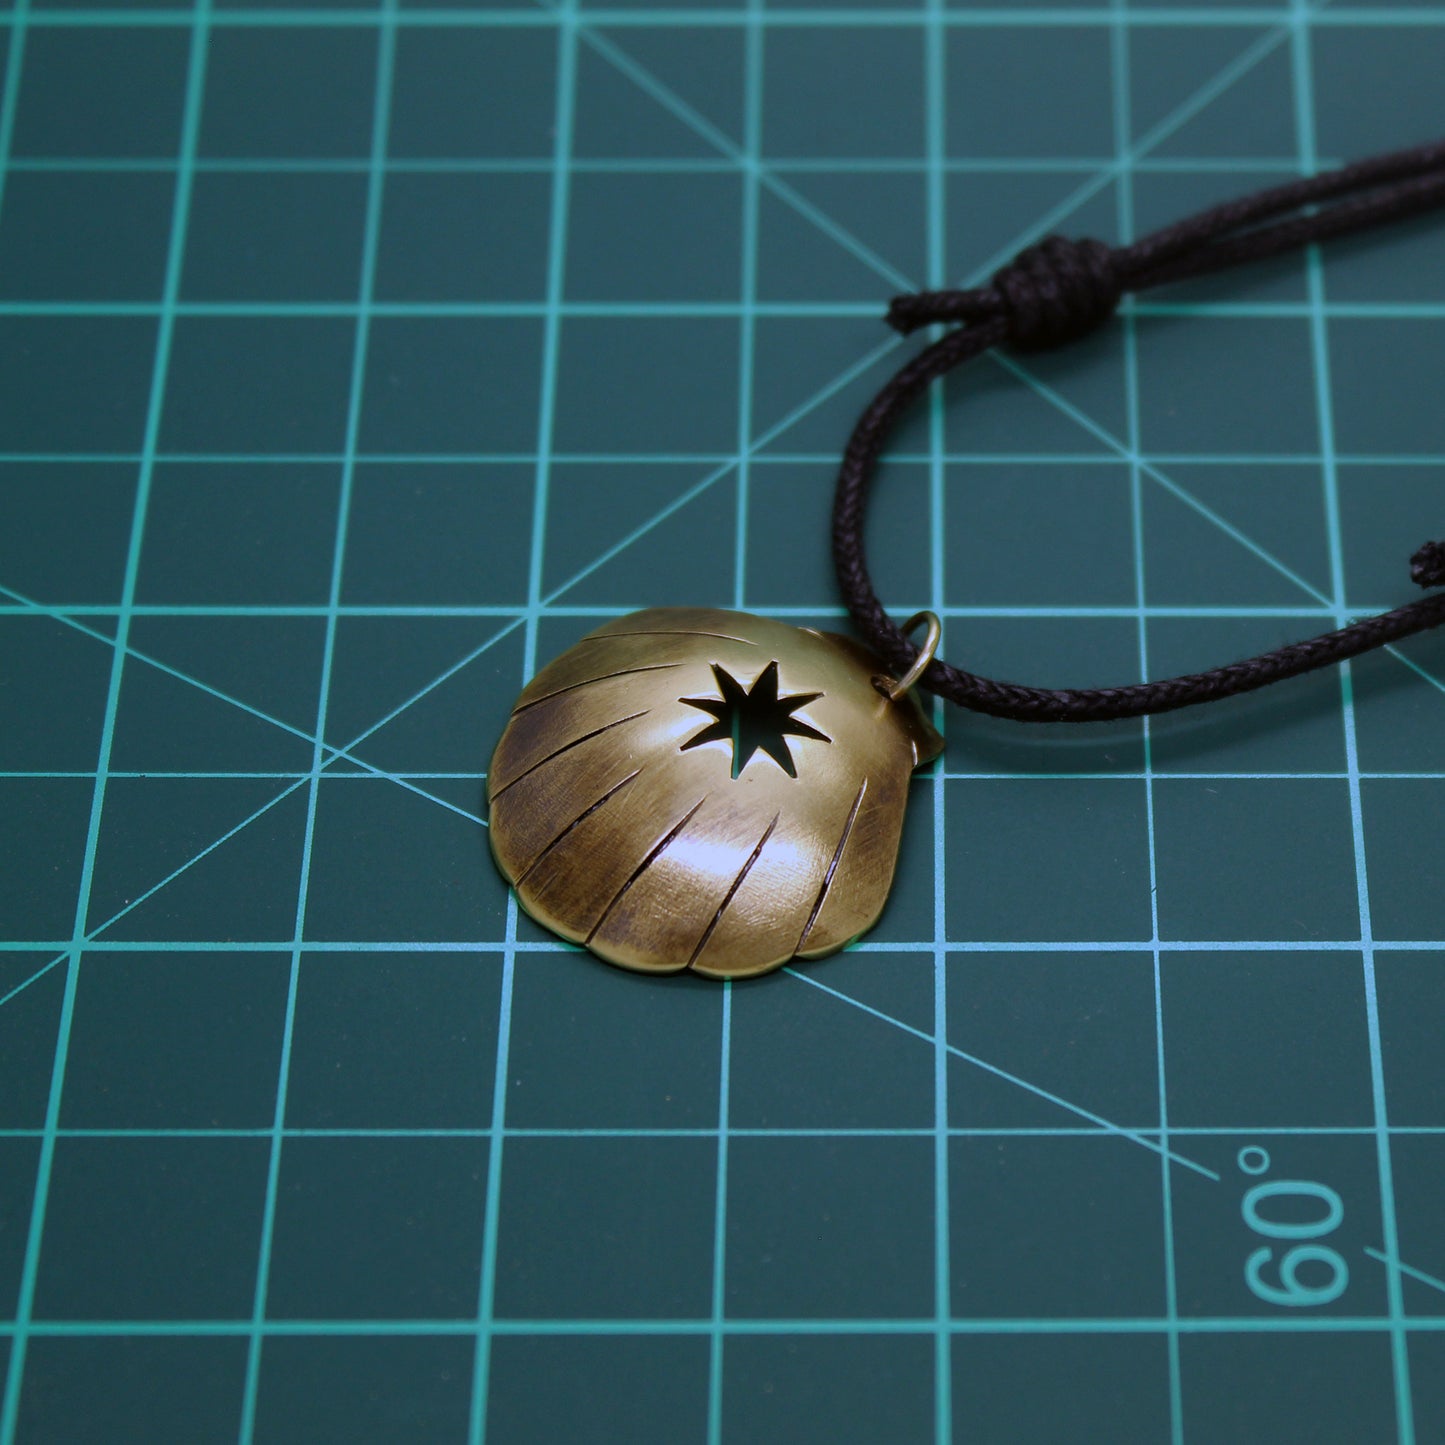 Shell of the Camino de Santiago with Lizarra Star, brass pendant